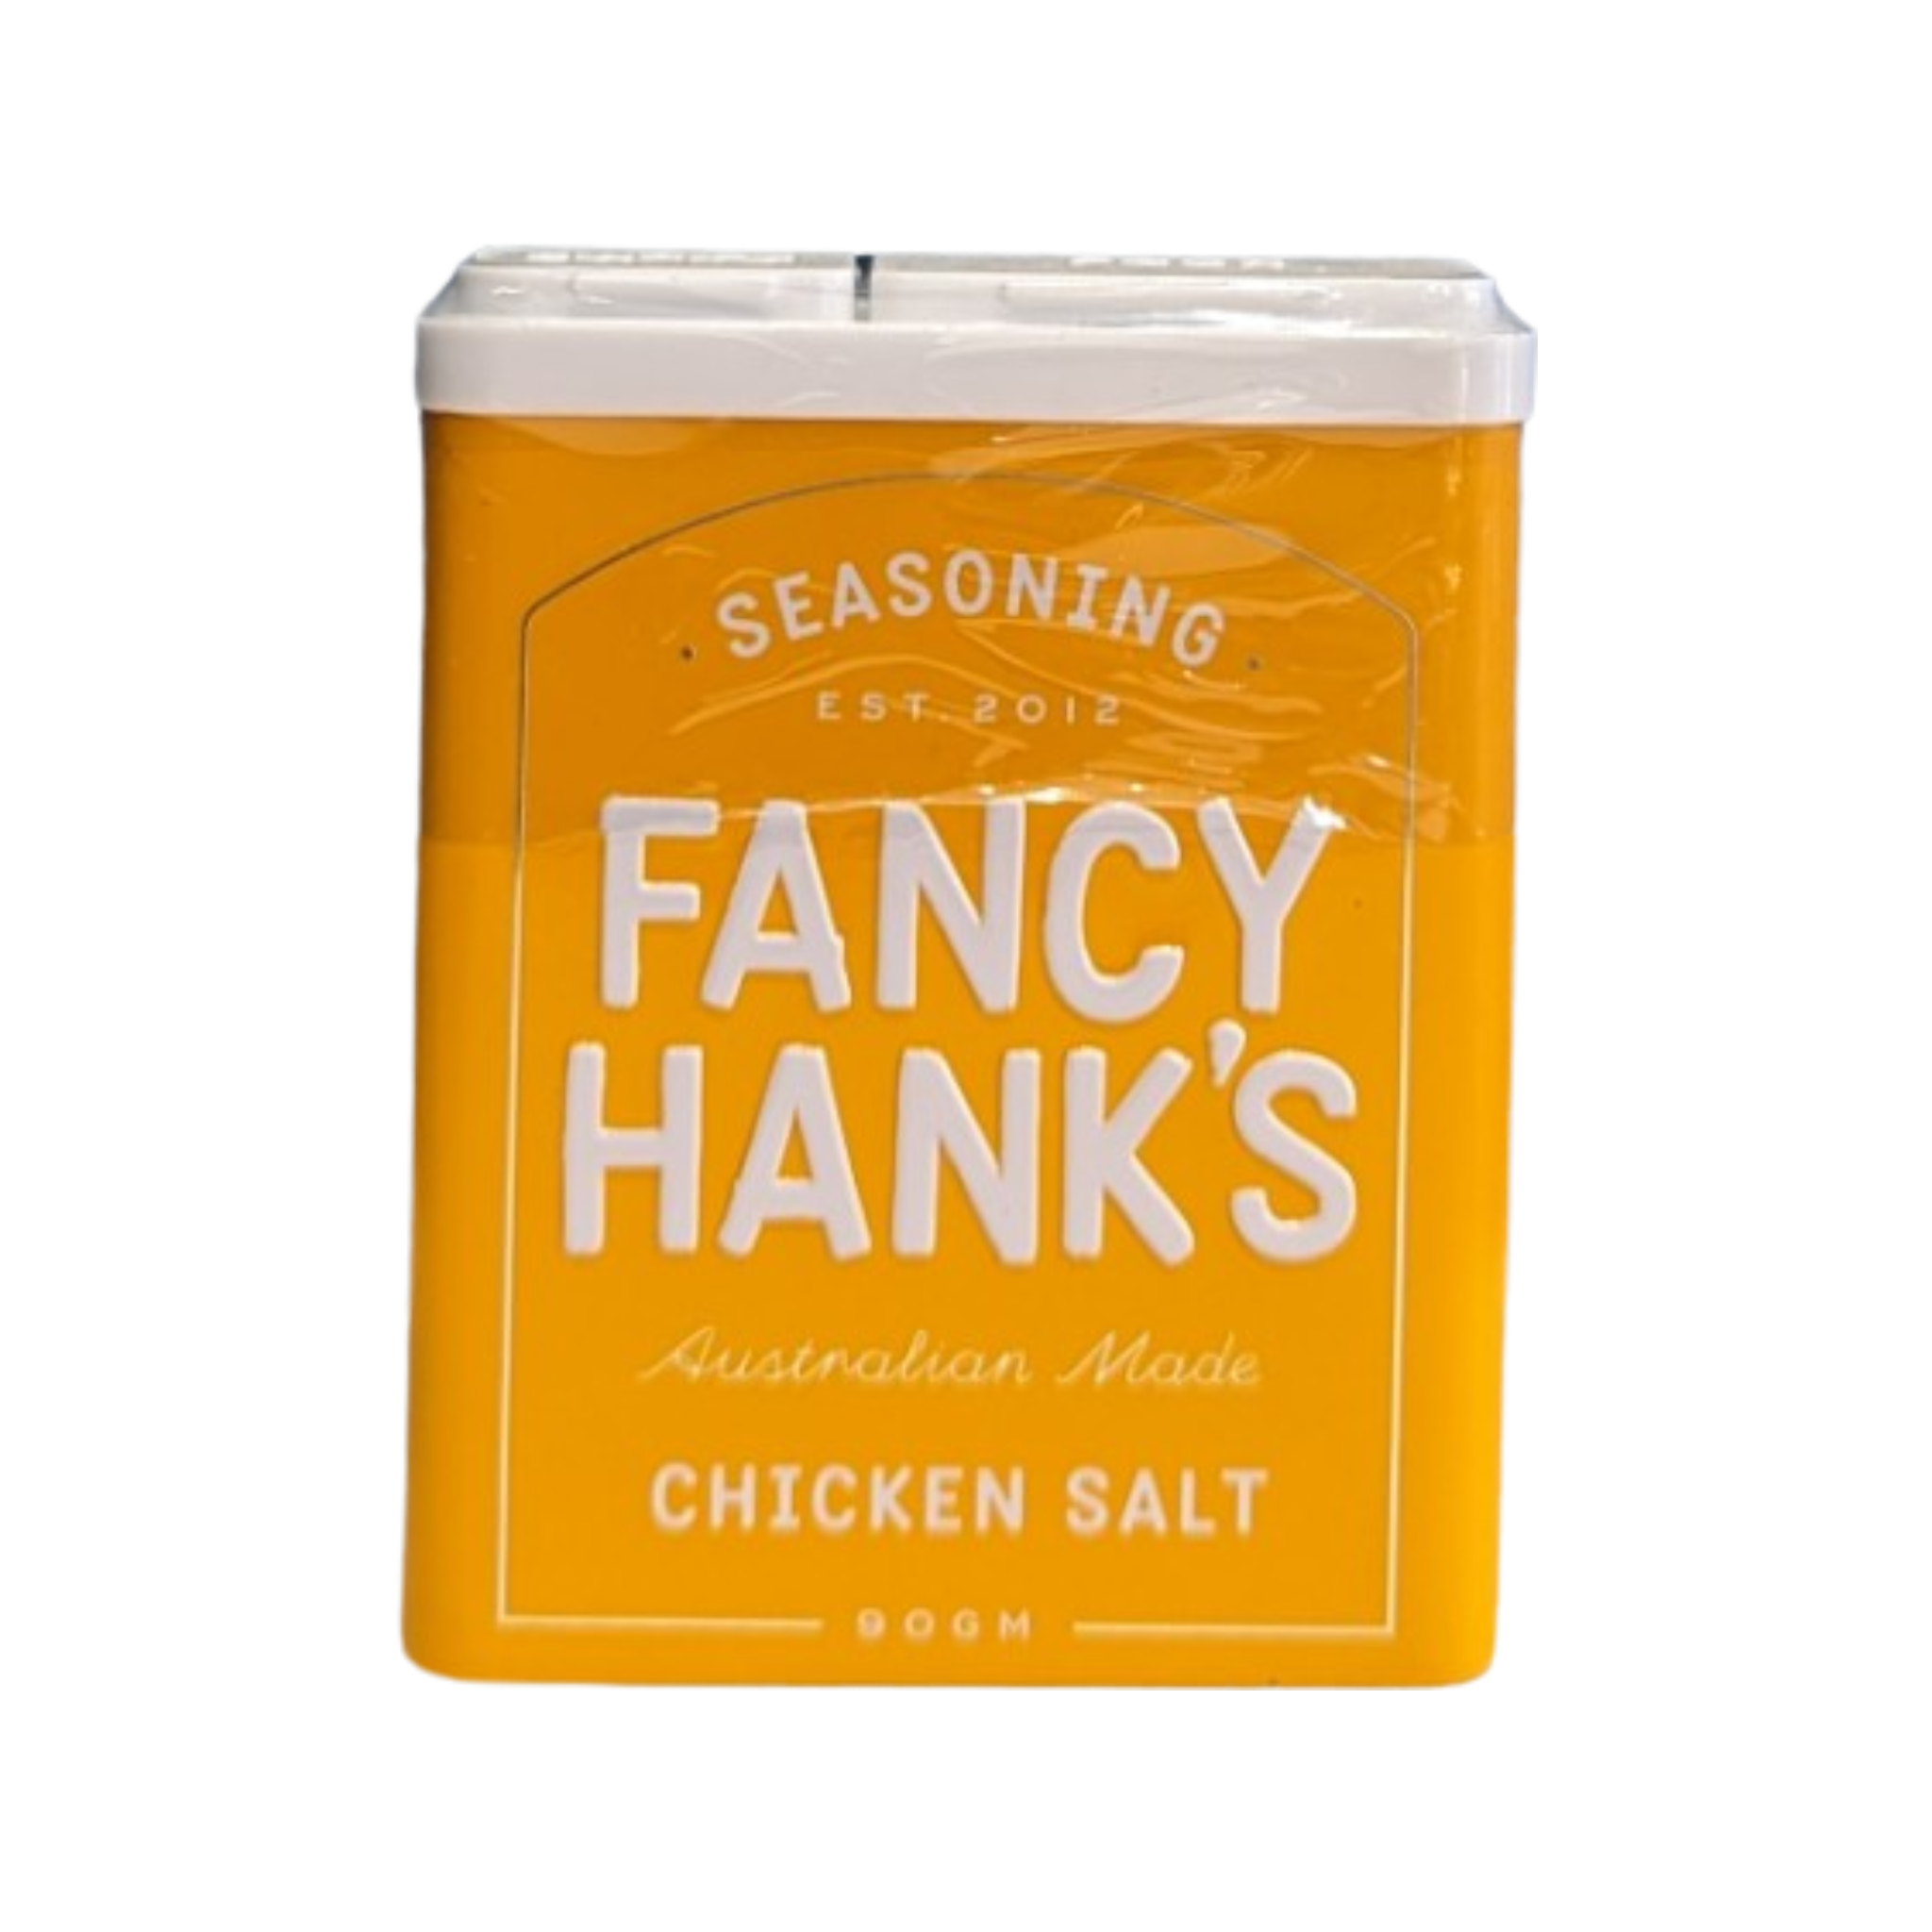 Fancy Hank's Chicken Salt